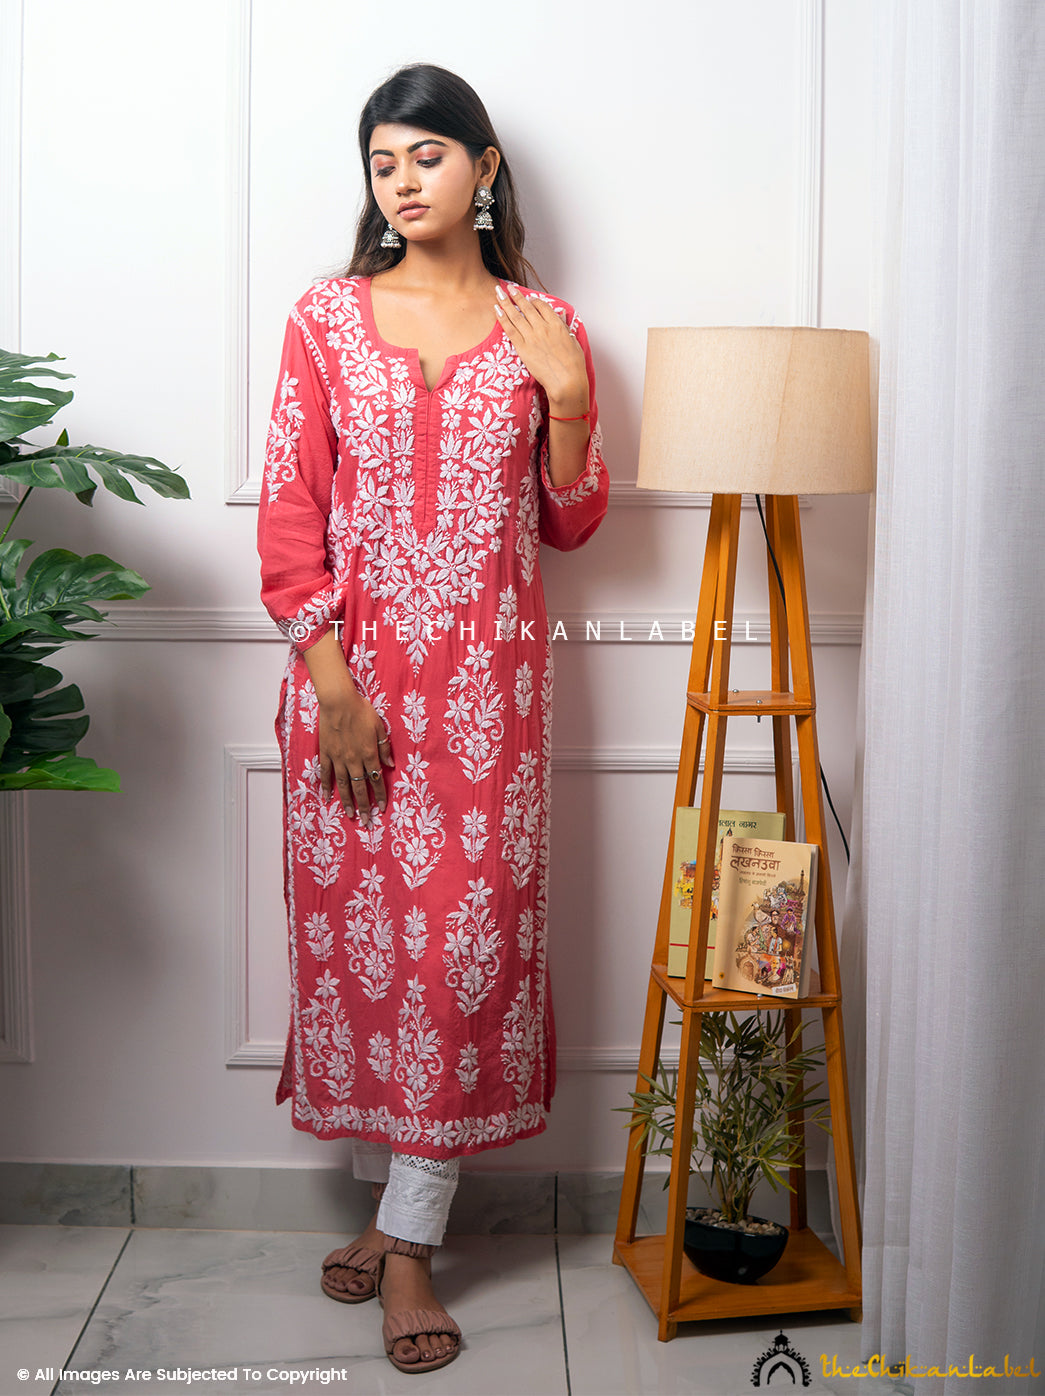 Buy Chikankari Straight Kurti in Modal Fabric for Women, Shop Authentic Lucknow Chikankari Straight Kurtis Online at Best Price Only at Thechikanlabel.